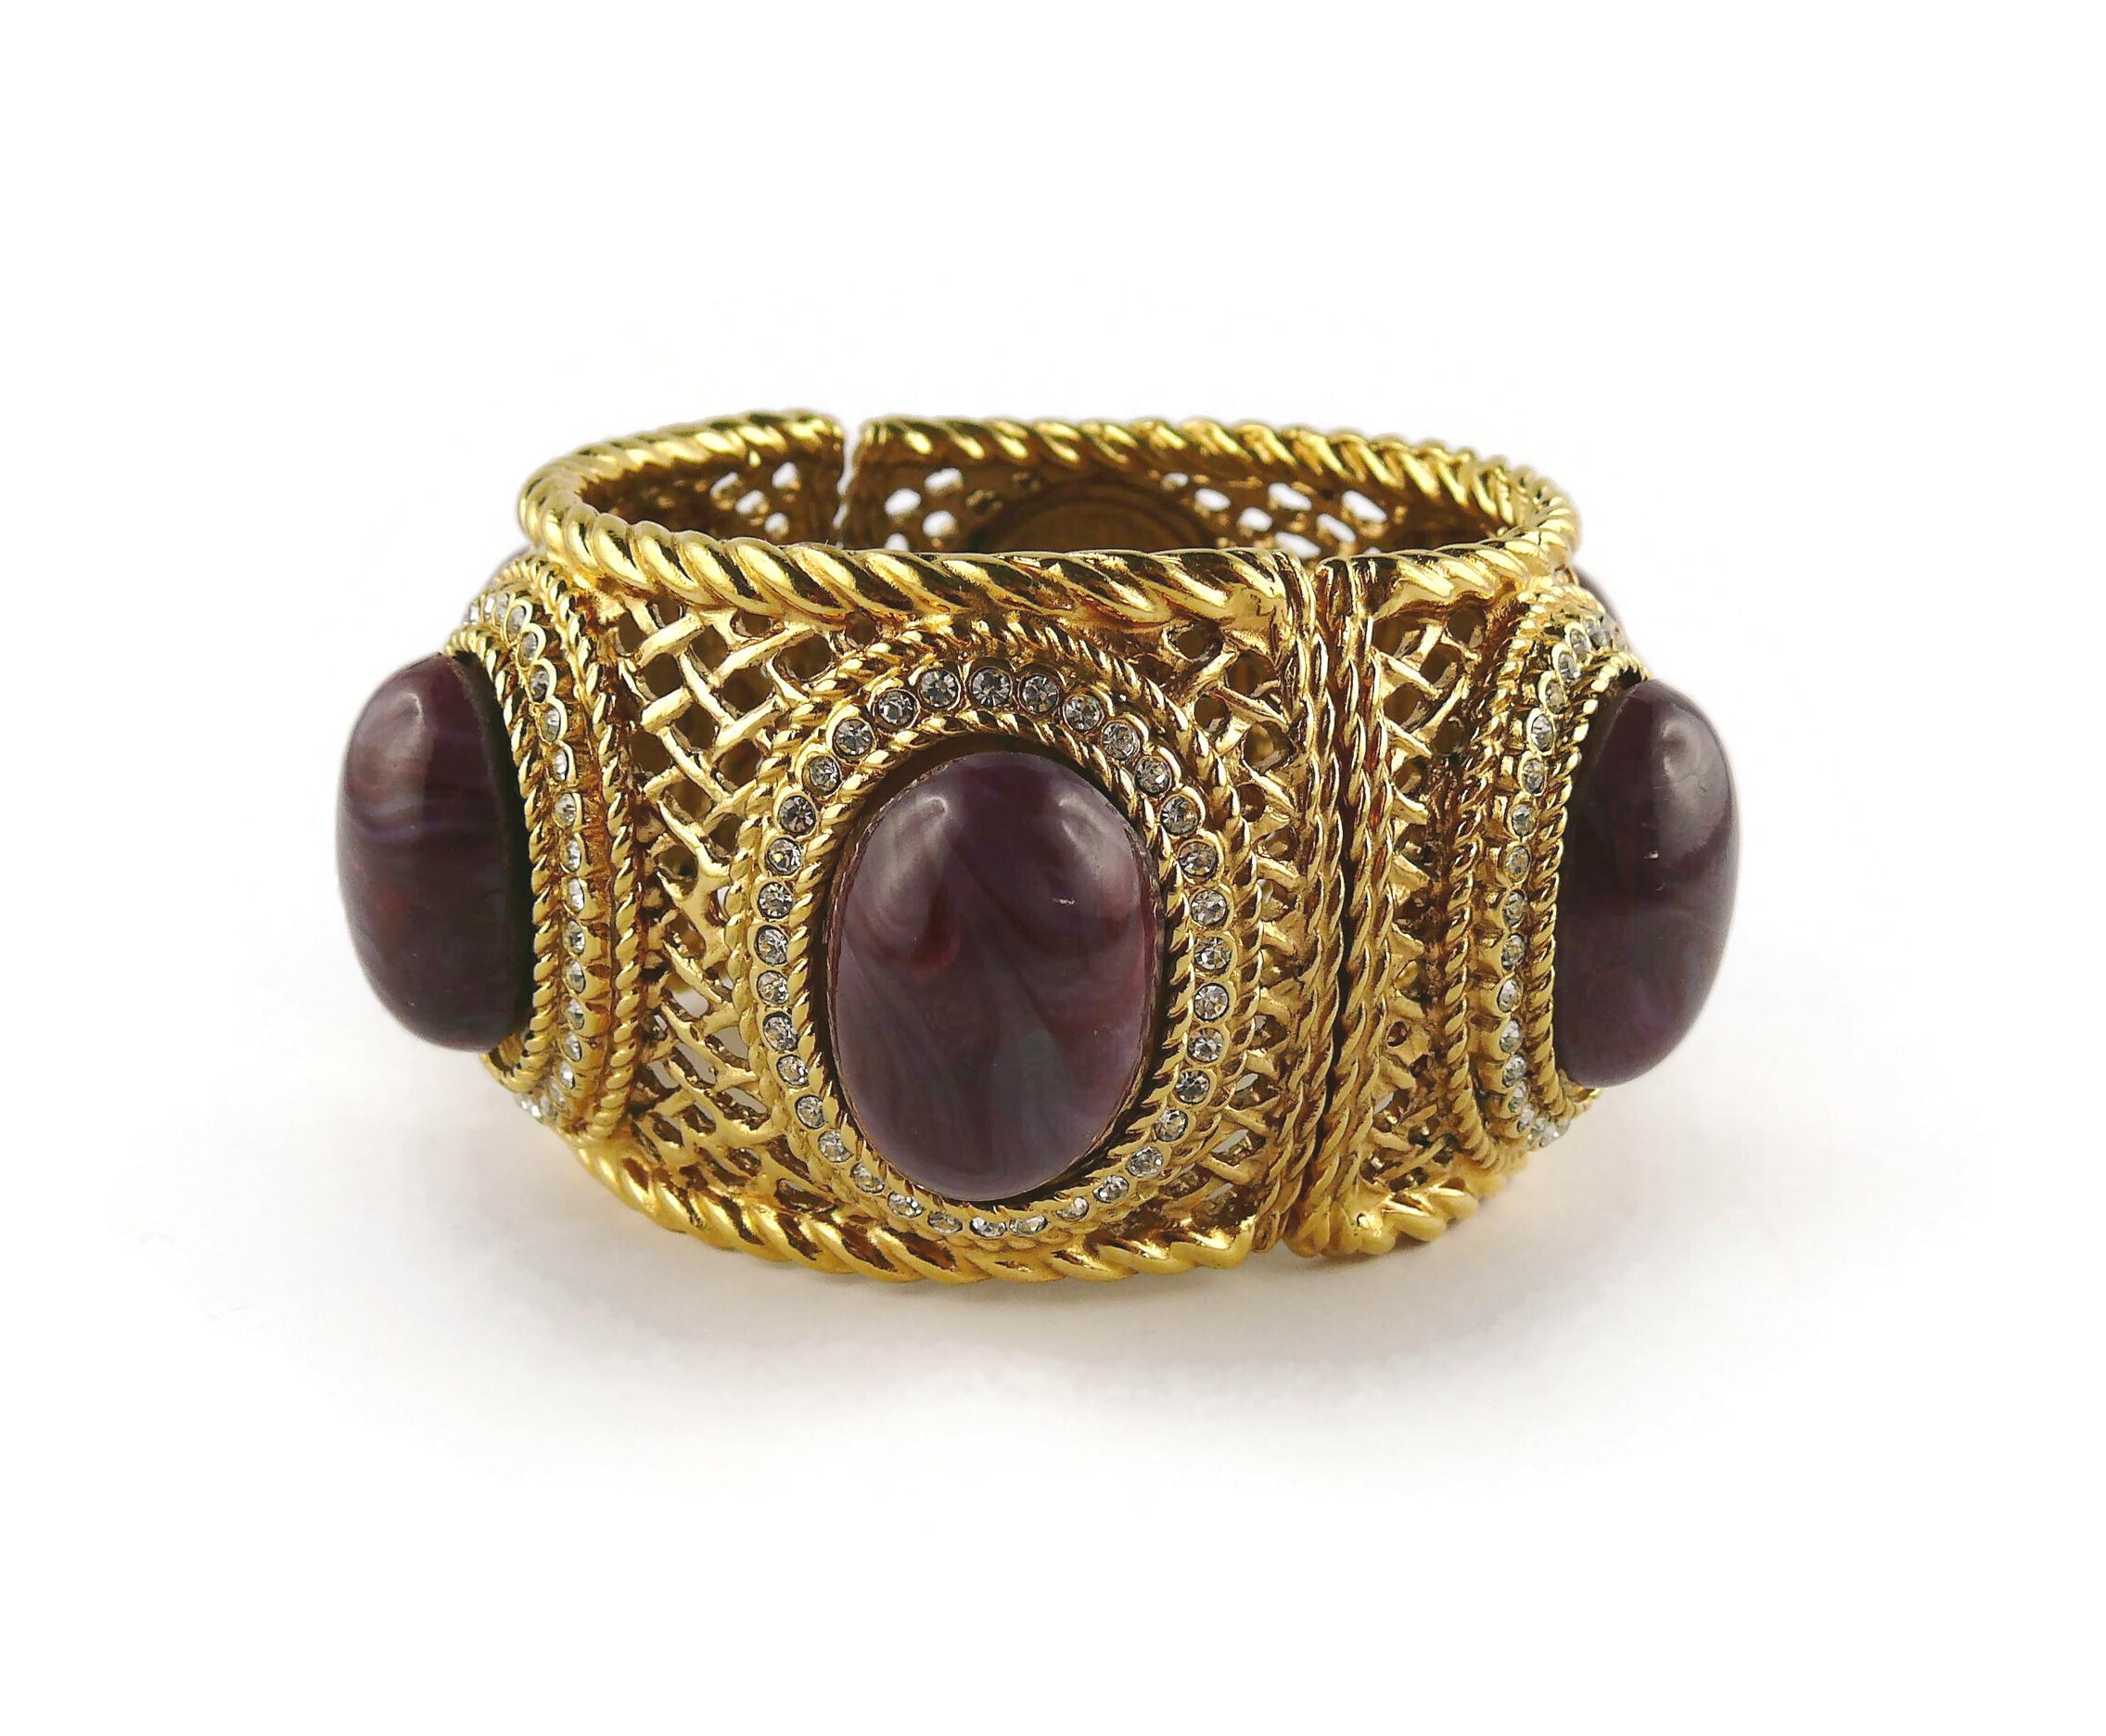 Christian Dior Boutique Massive Jewelled Gold Toned Latticework Cuff Bracelet For Sale 2